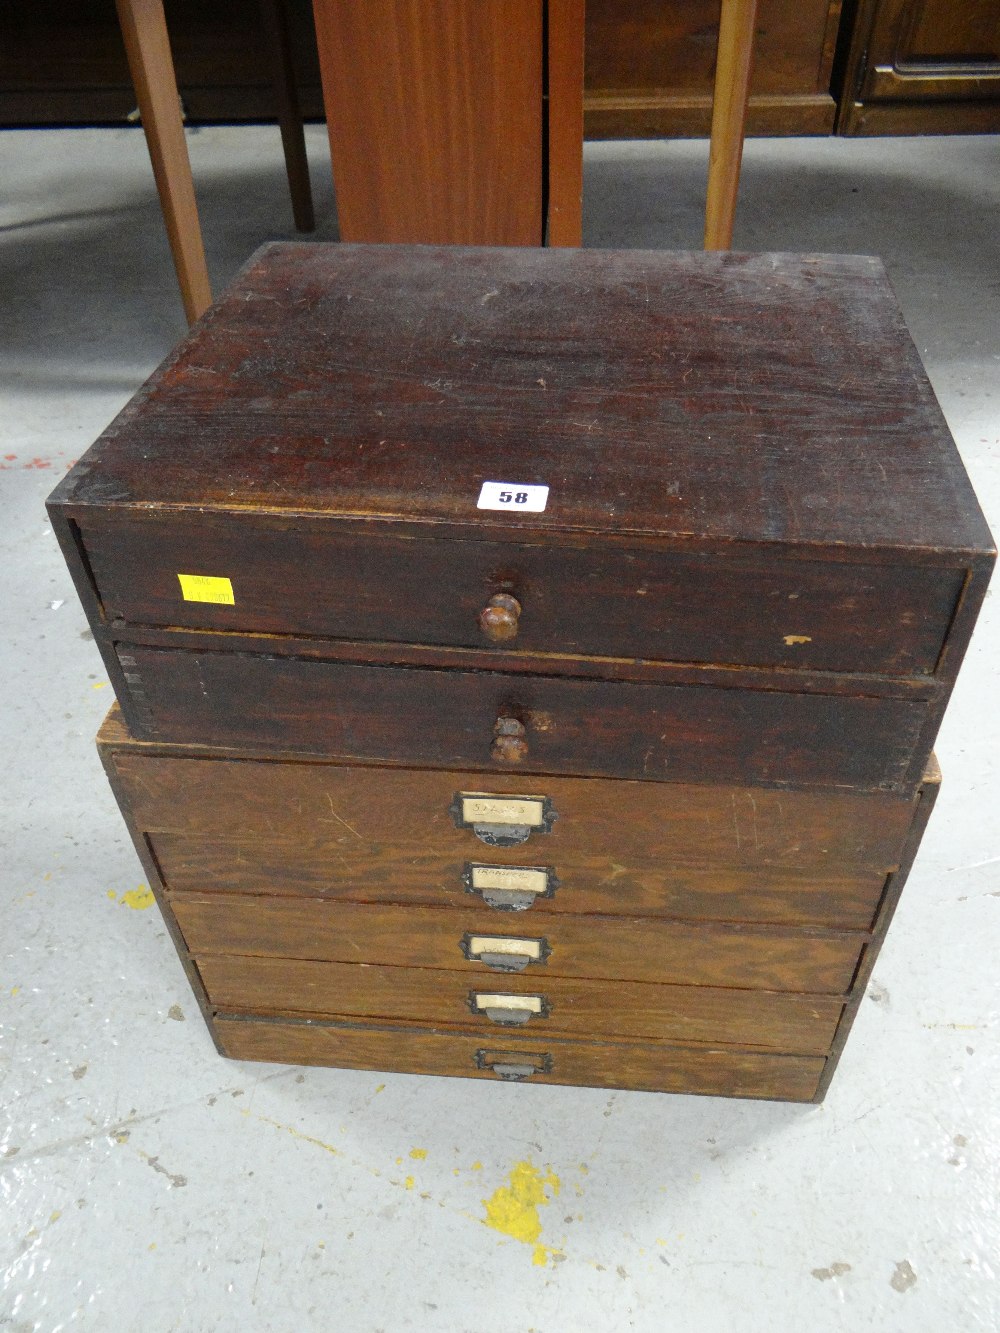 A vintage five-drawer office filing drawer and two-drawer vintage similar